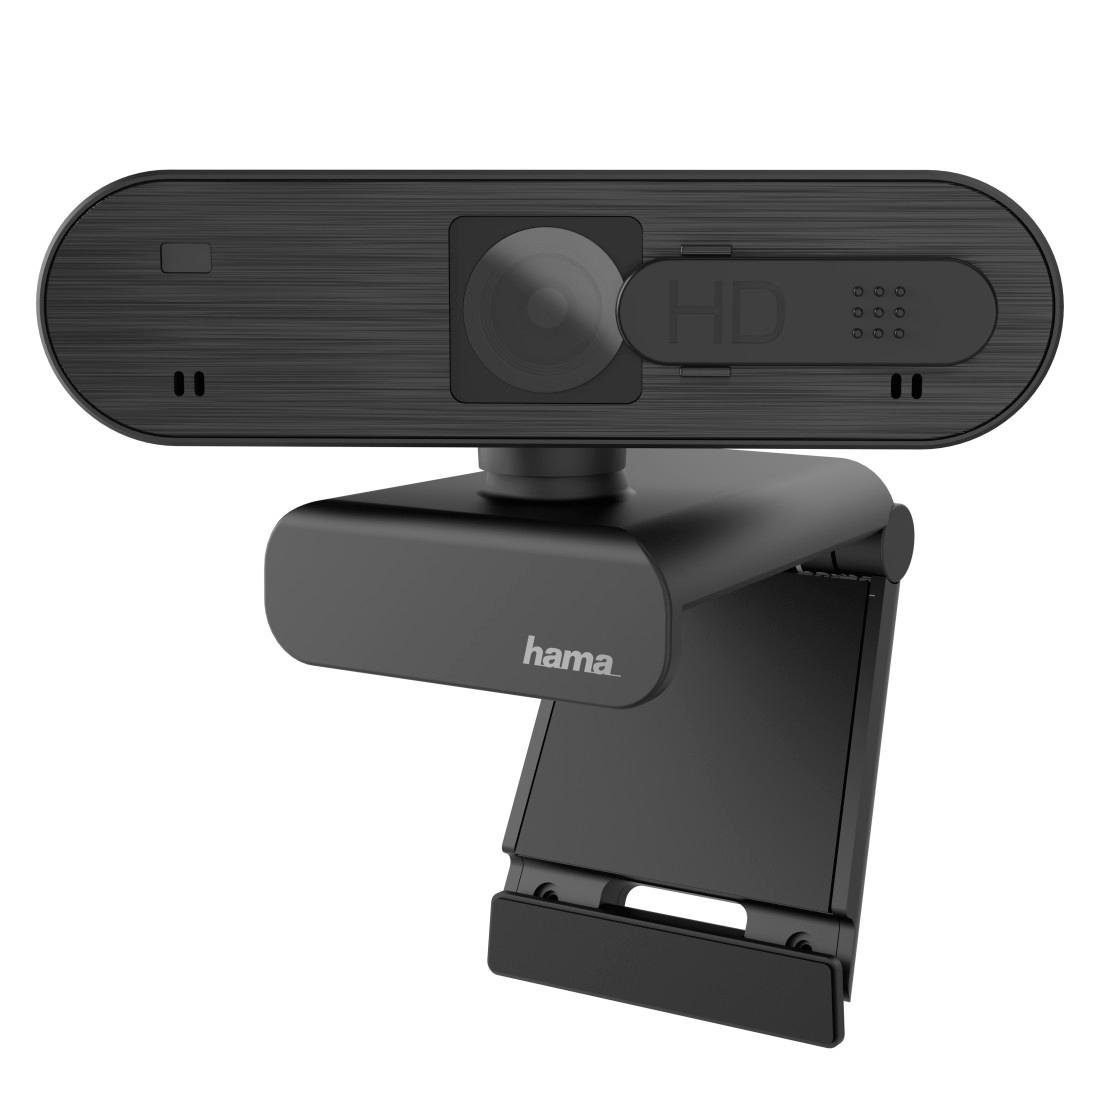 Hama PC-Webcam "C-600 Pro", Webcam 1080p Full-HD Webcam